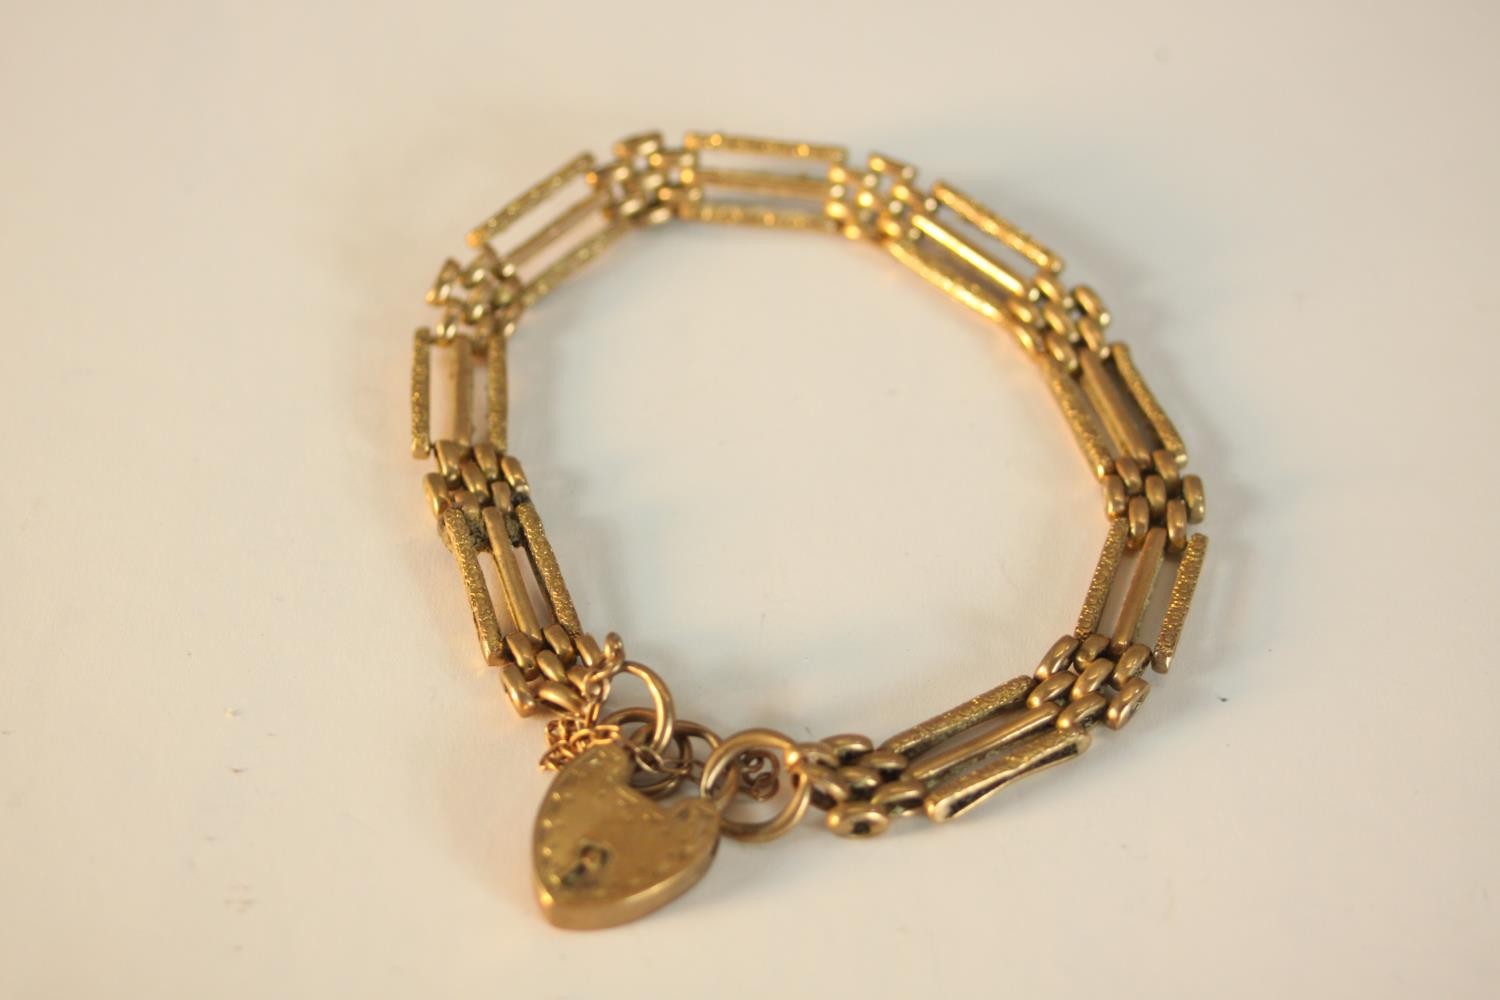 A 9ct rose gold Victorian engraved gate link bracelet charm bracelet with heart padlock. Hallmarked: